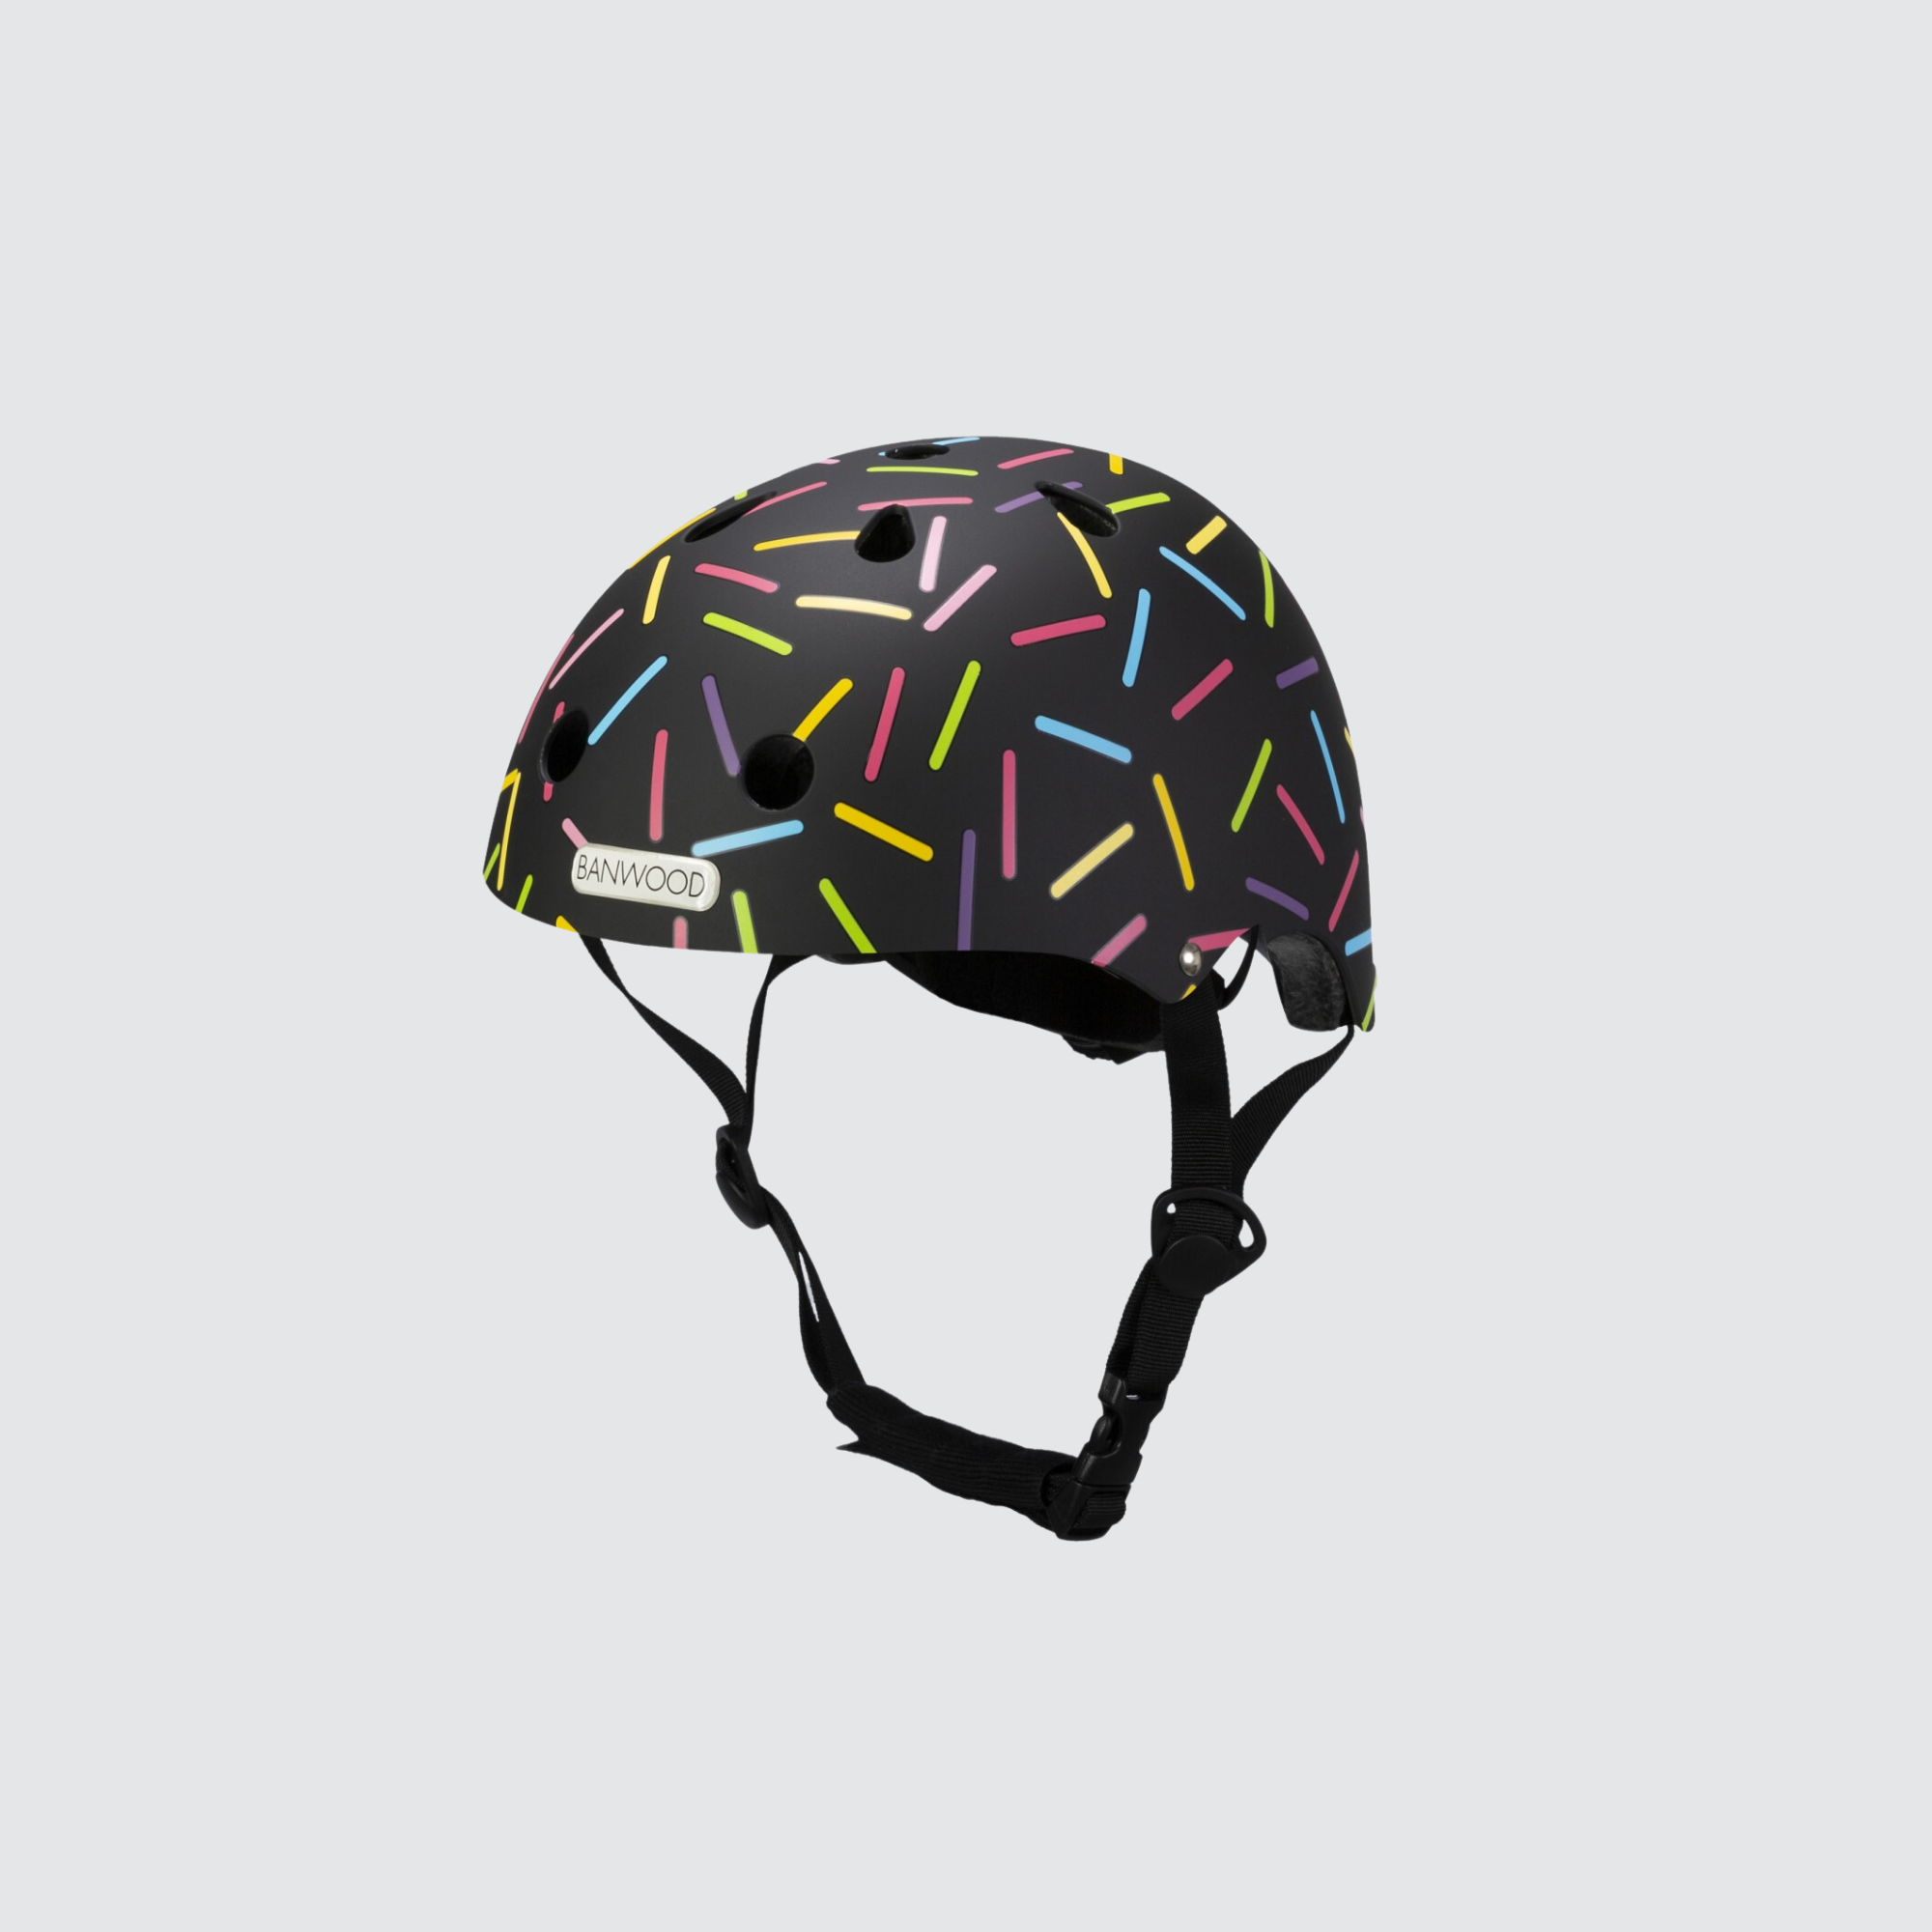 banwood junior kids bike helmet marest allegra black sprinkles